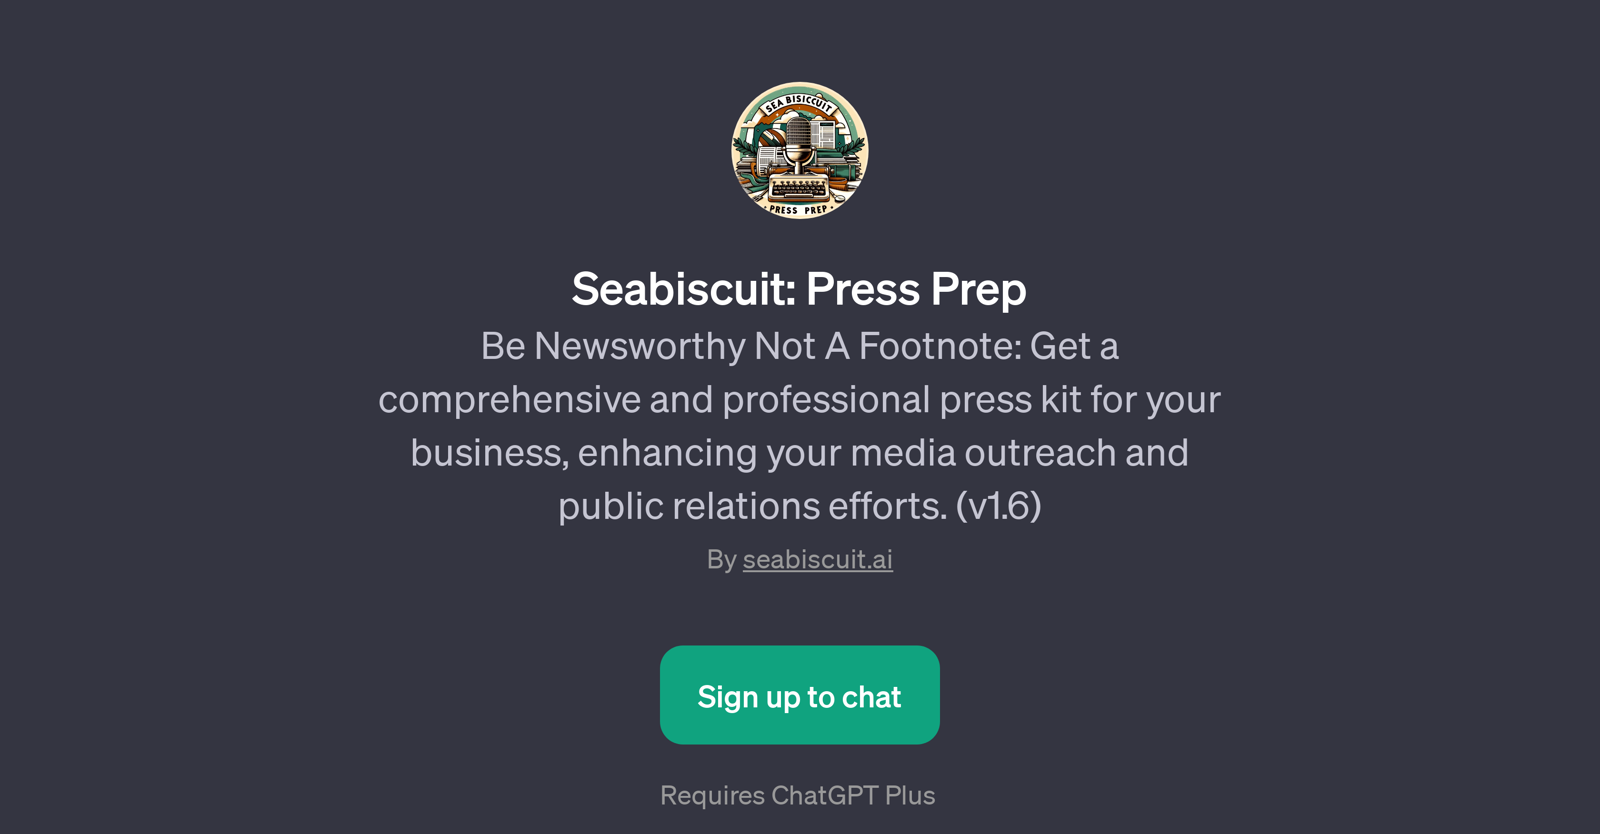 Seabiscuit: Press Prep website